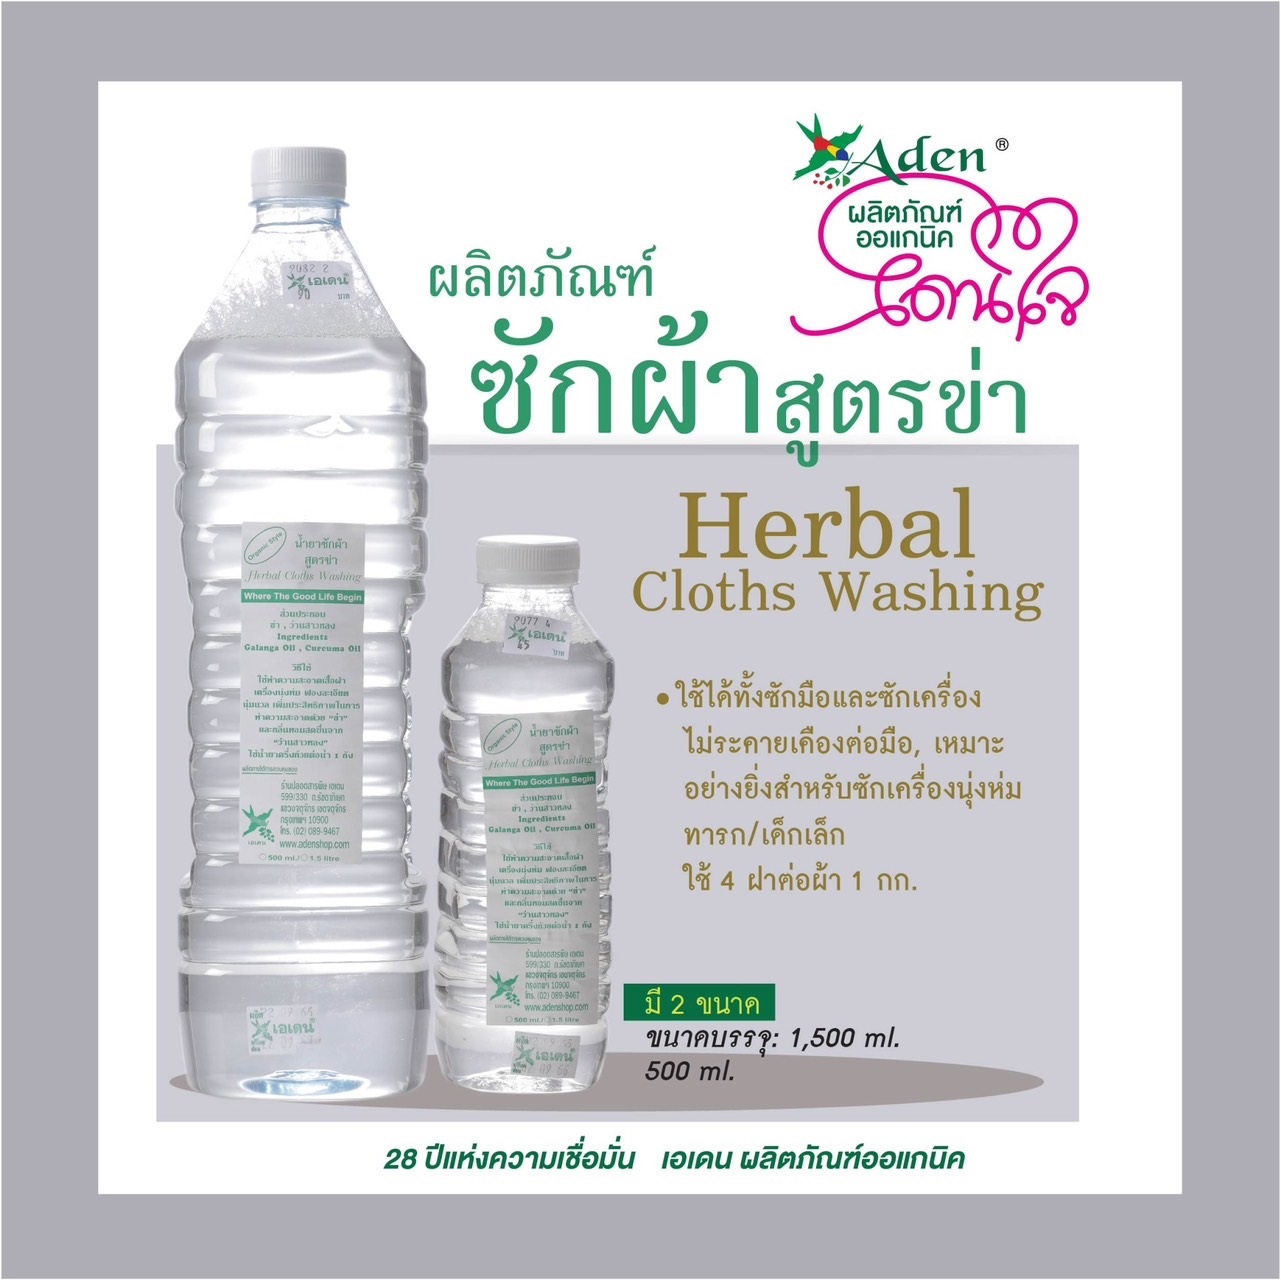 P11-0416 - : - น้ำยาซักผ้า  สูตรข่า ( Herbal cloths washing-Galanga oil )